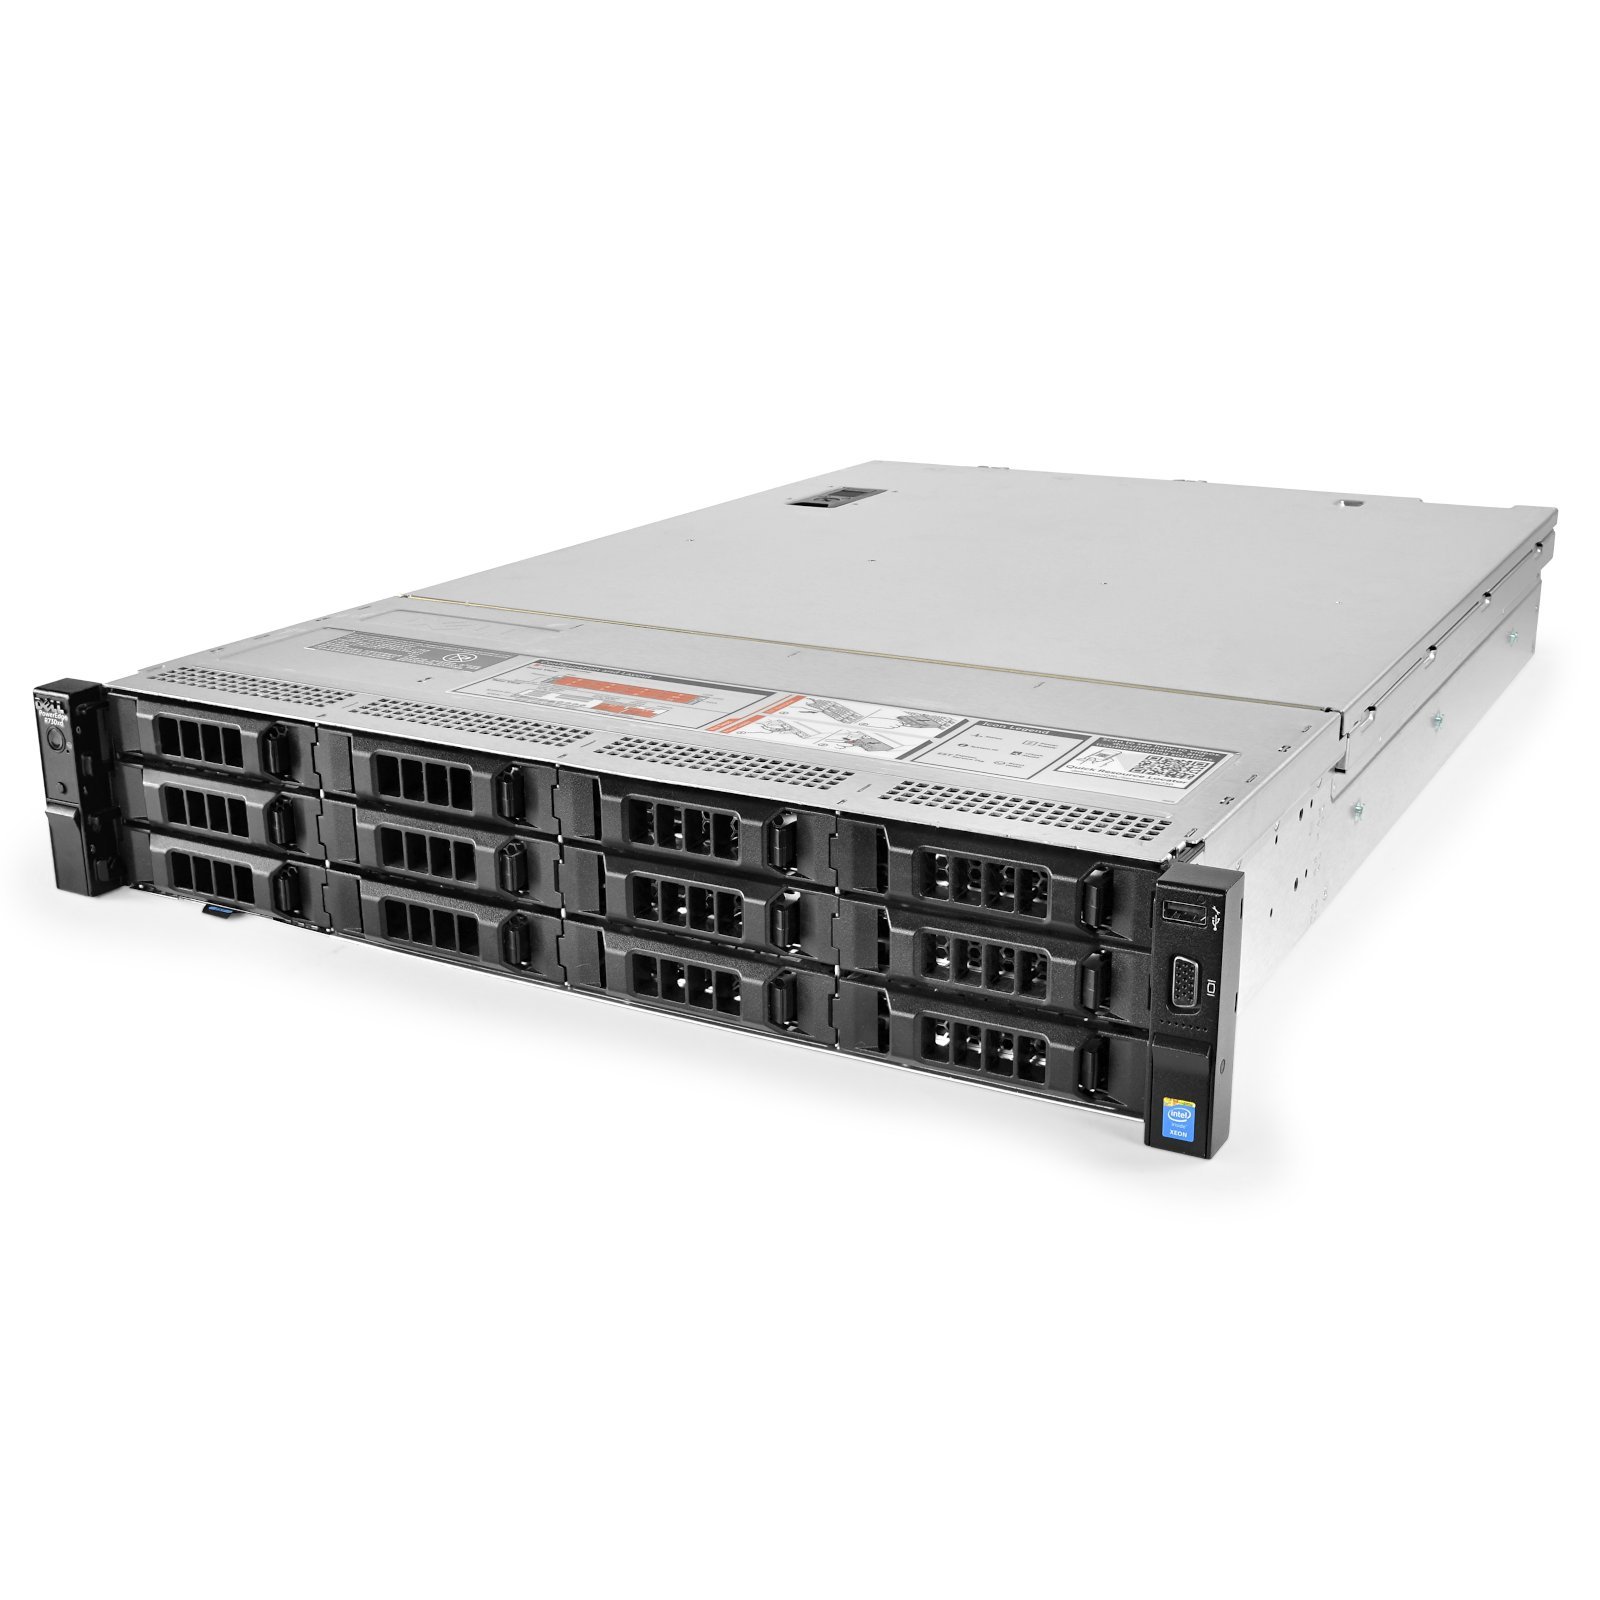 Подробное фото Сервер DELL PowerEdge R730XD Xeon 2x E5-2697v3 256Gb 2133P DDR4 12x noHDD 3.5", SAS RAID Perc H730 mini, 1024Mb, 2*PSU 750W